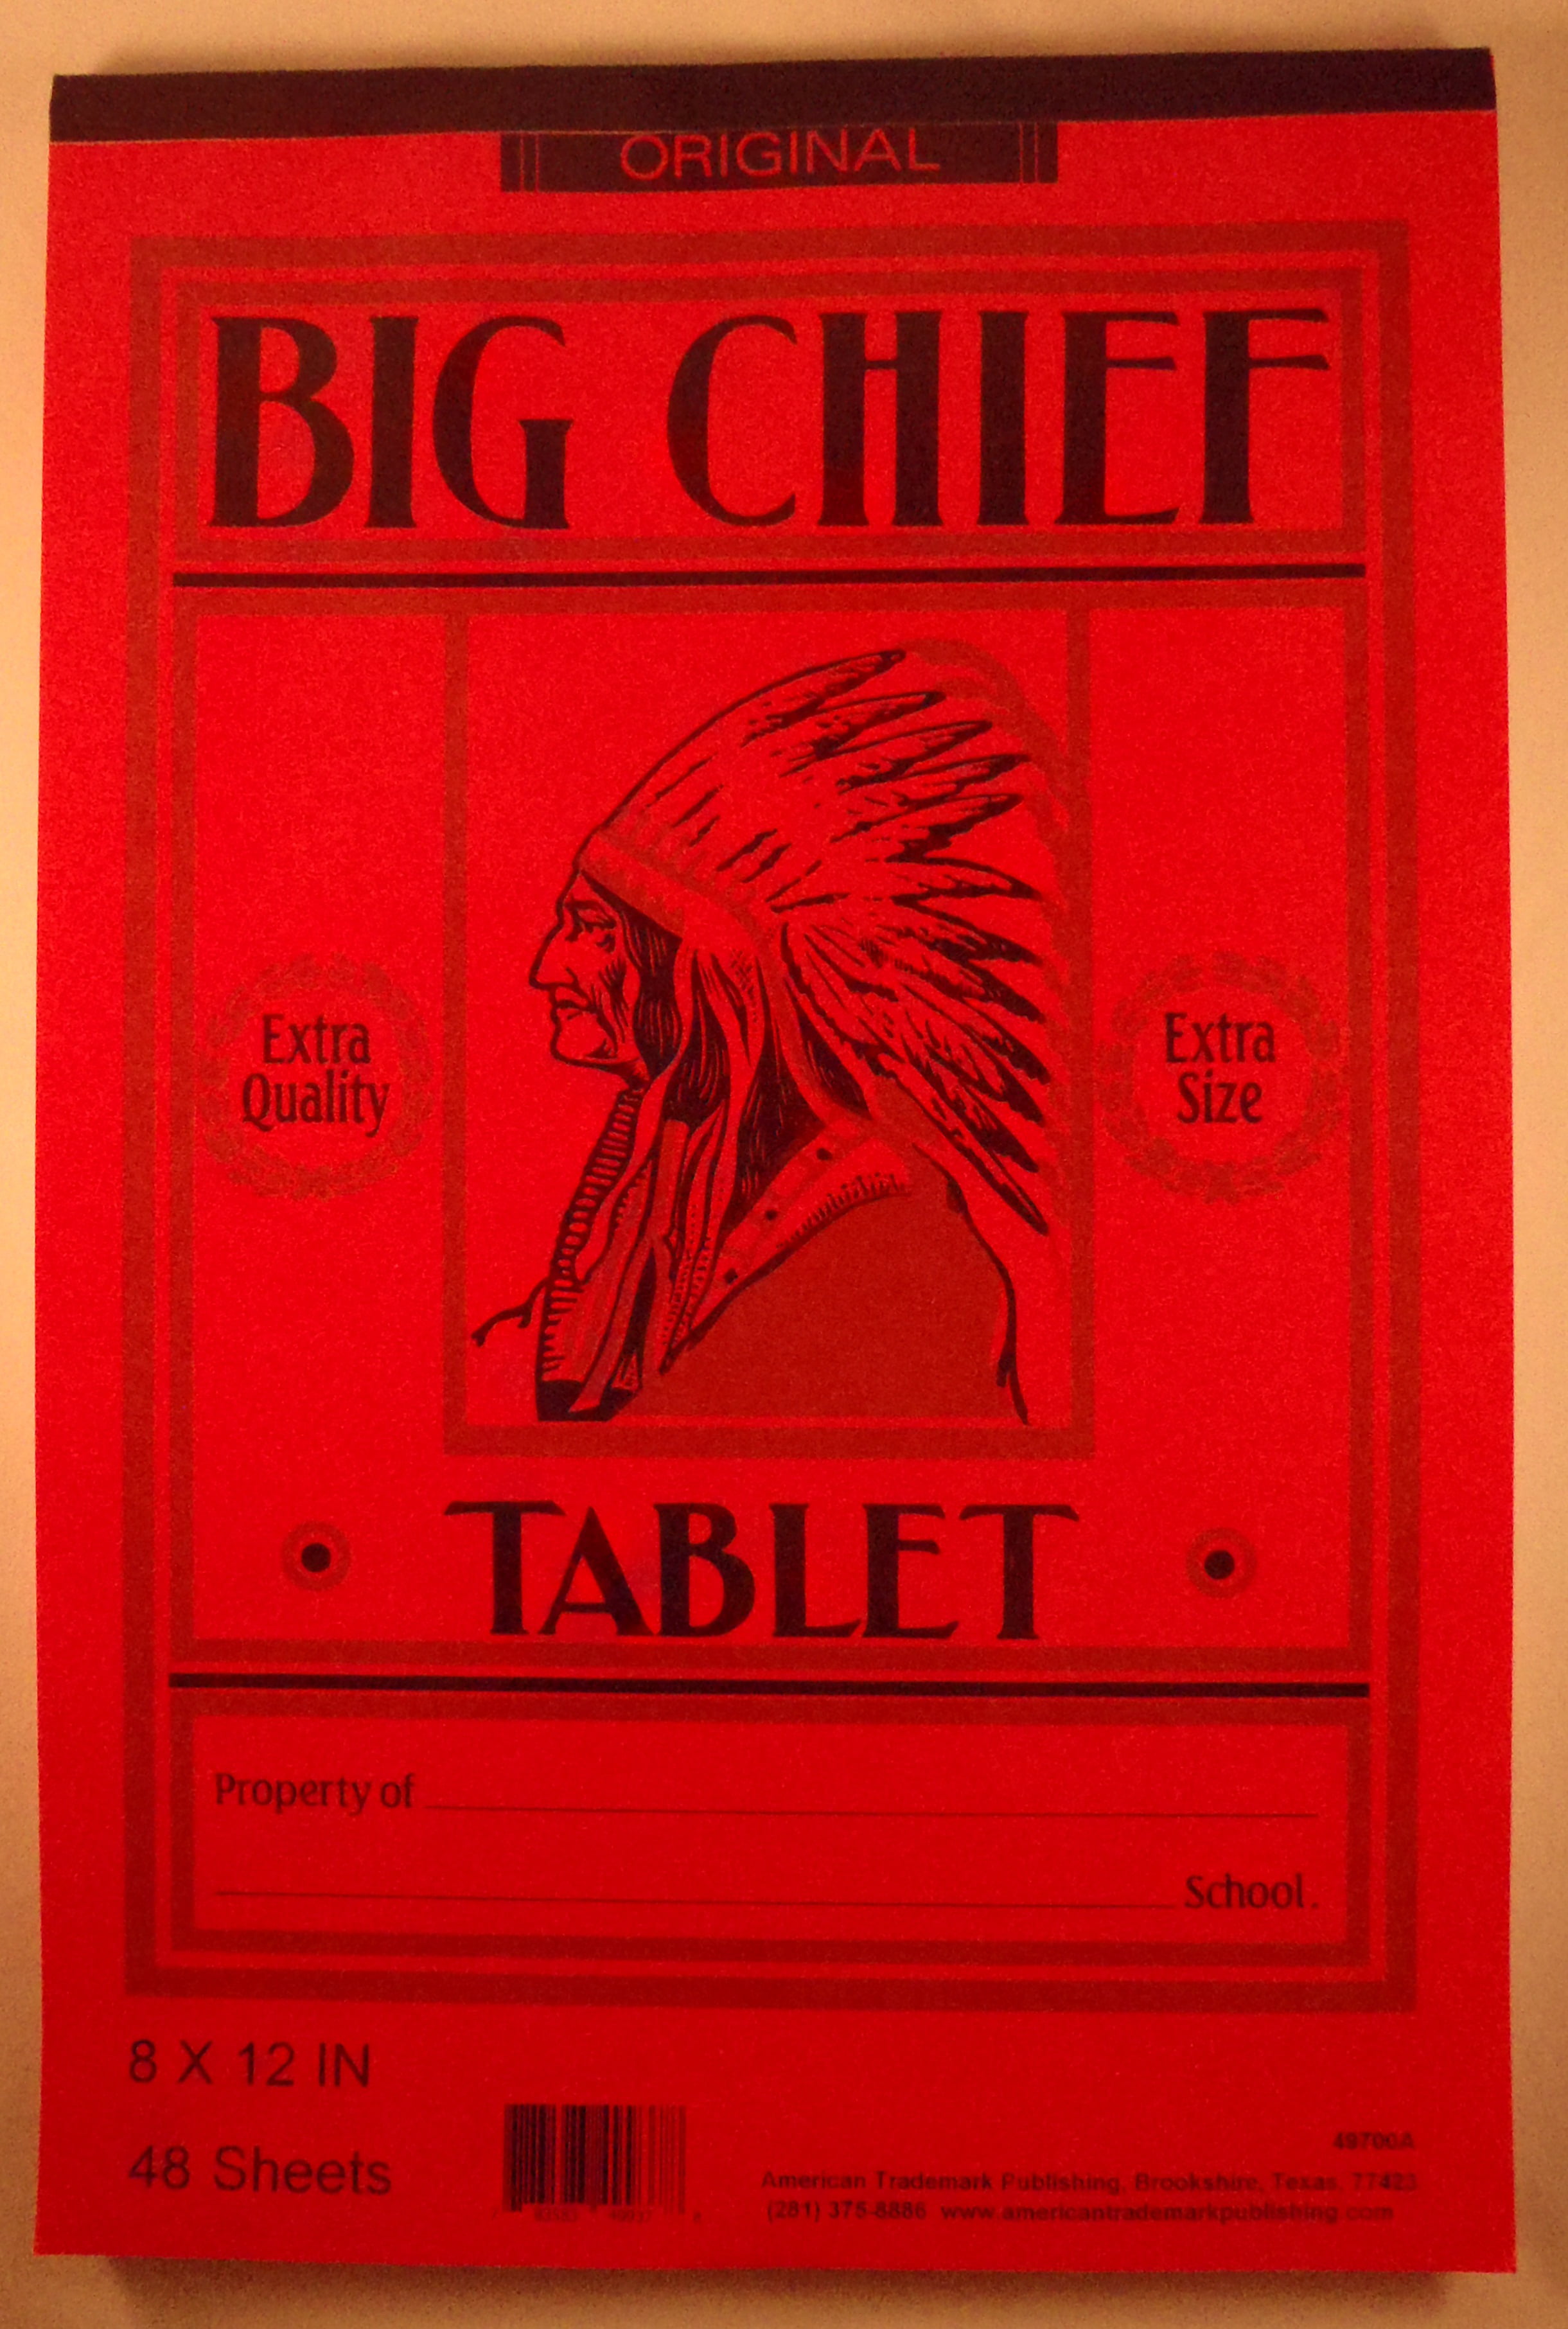 Original Big Chief tablets now - Original Big Chief Tablet